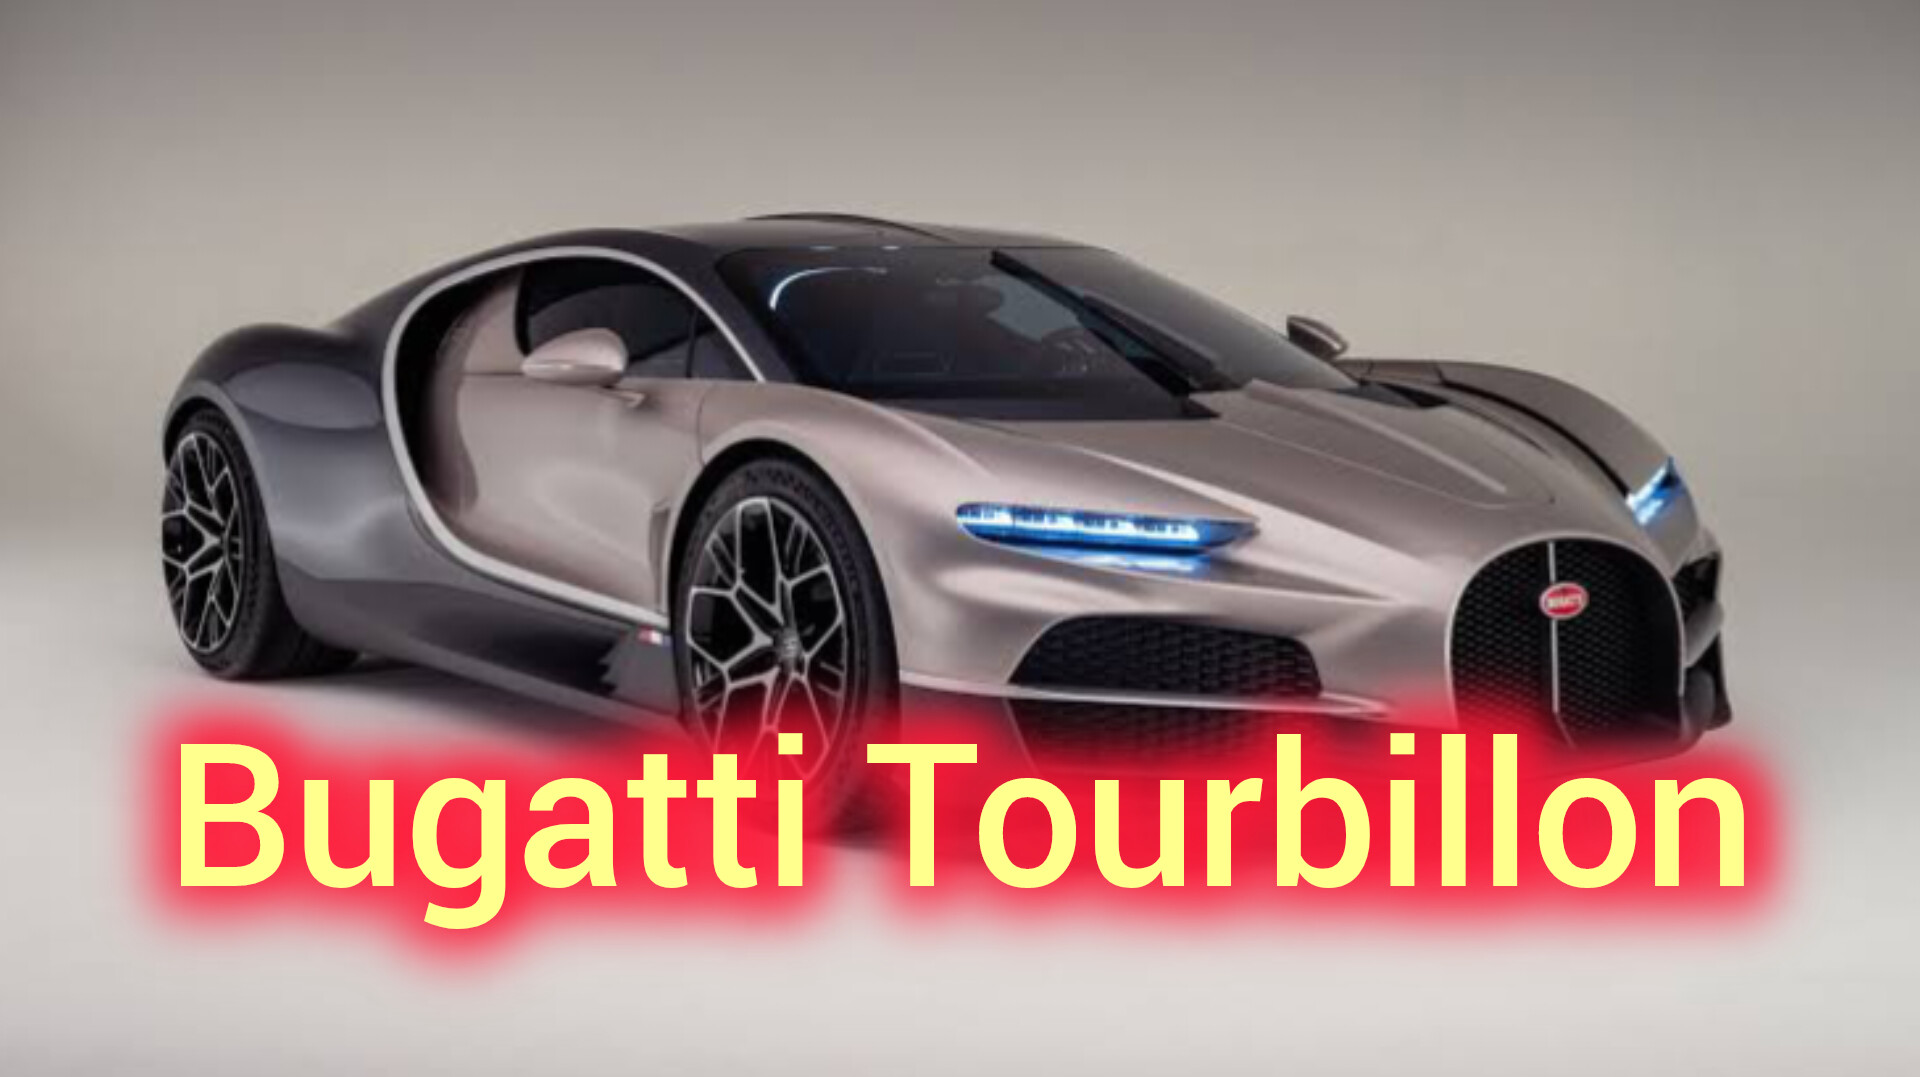 Mobil Mewah Bugatti Tourbillon, Performa Aerodinamis Dibekali Mesin V16 dan Tenaga 100km/Jam Hanya 2 Detik